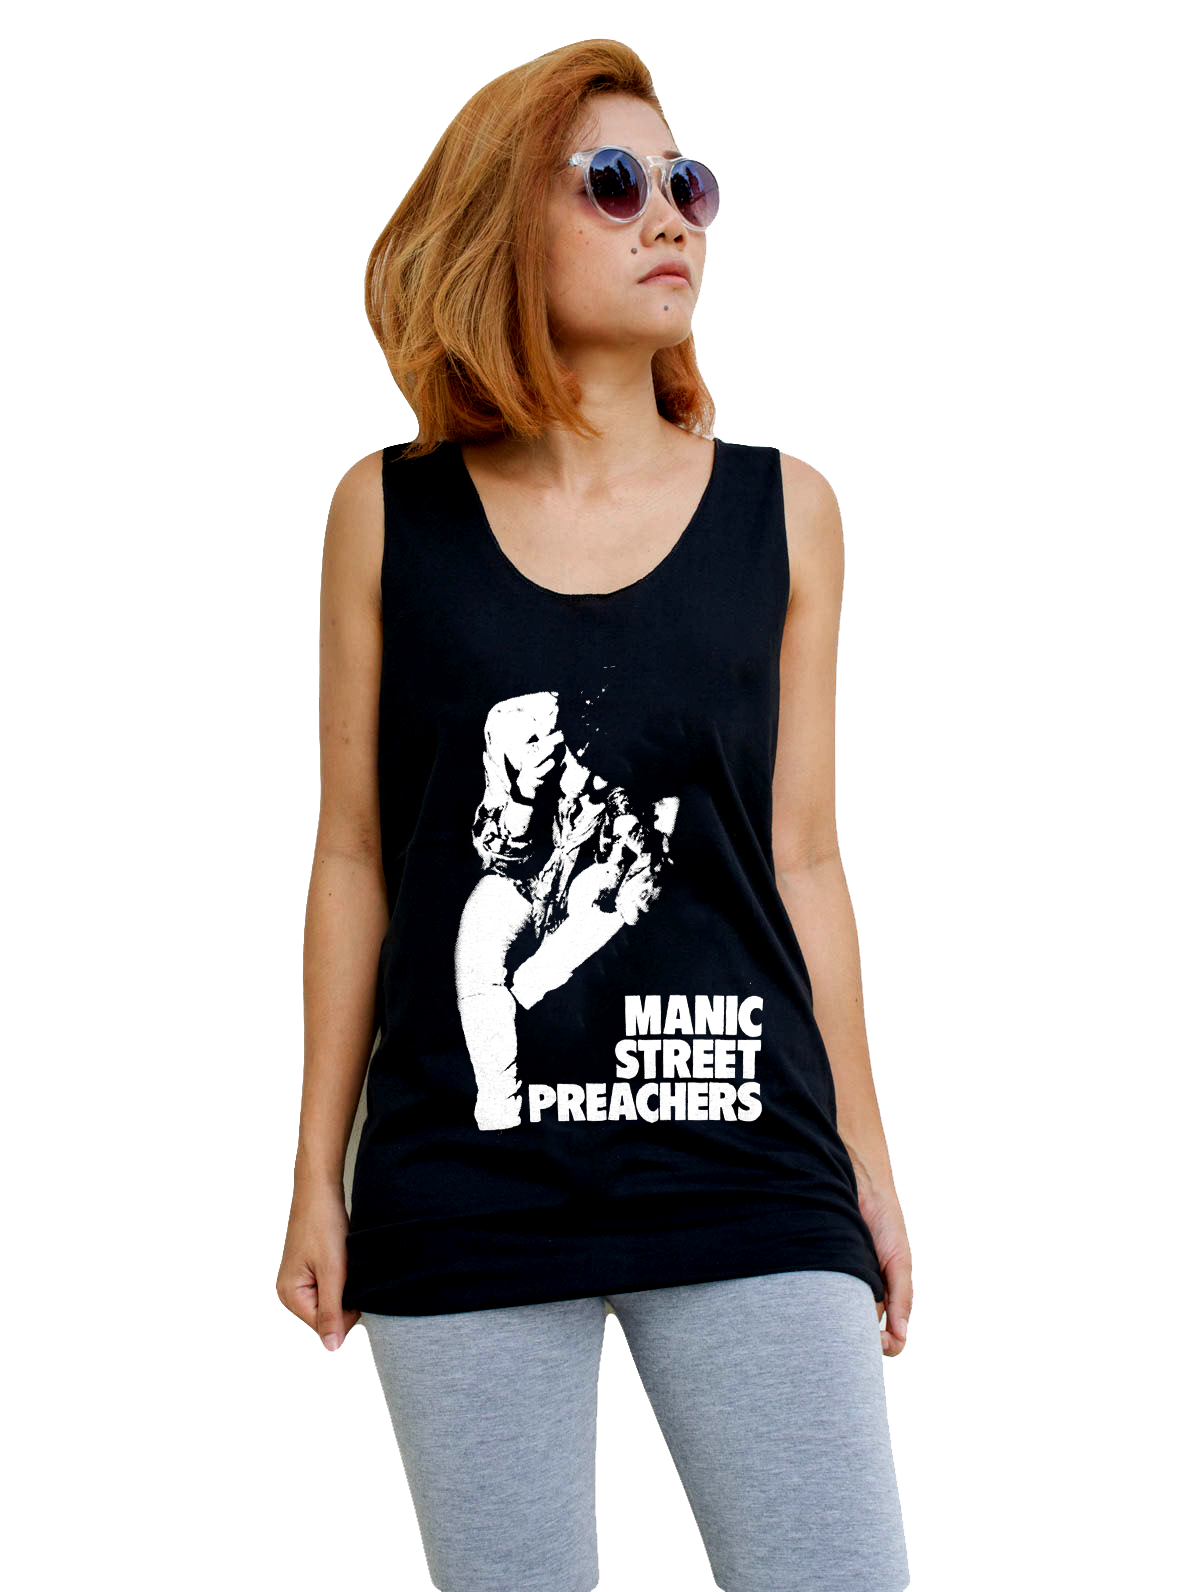 Unisex Manic Street Preachers Tank-Top Singlet vest Sleeveless T-shirt